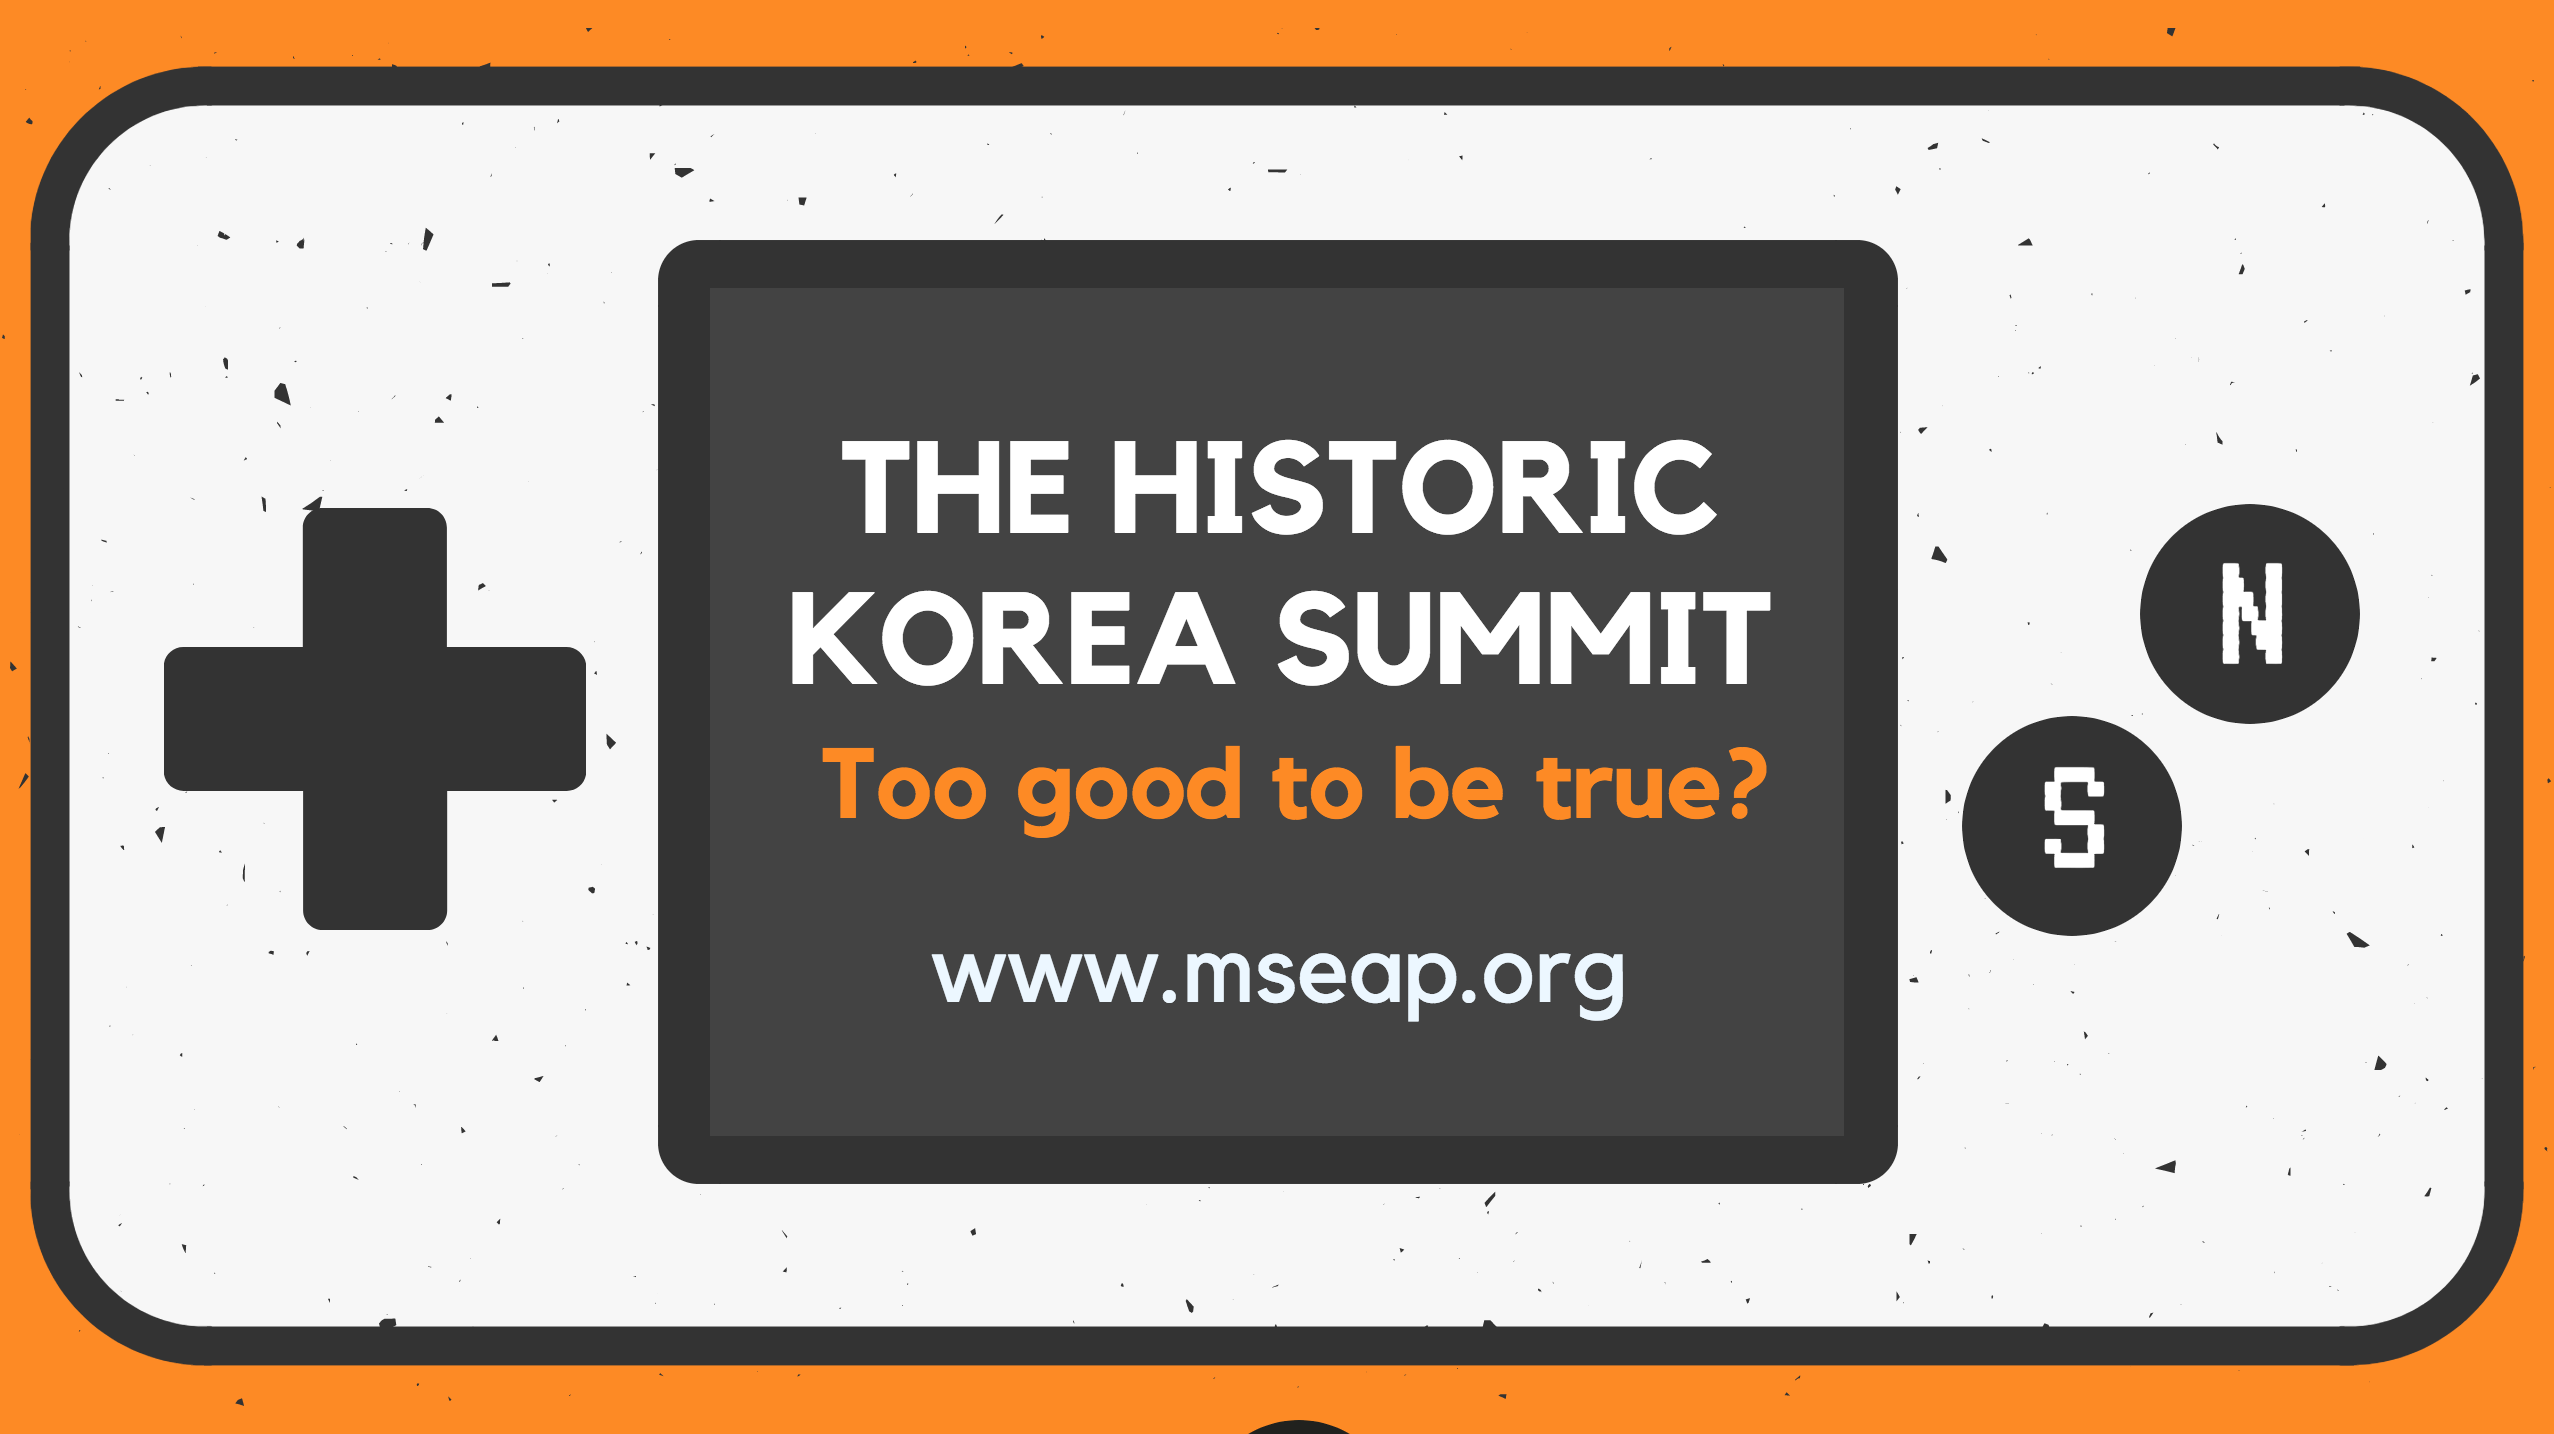 The historic Korea summit: too good to be true?